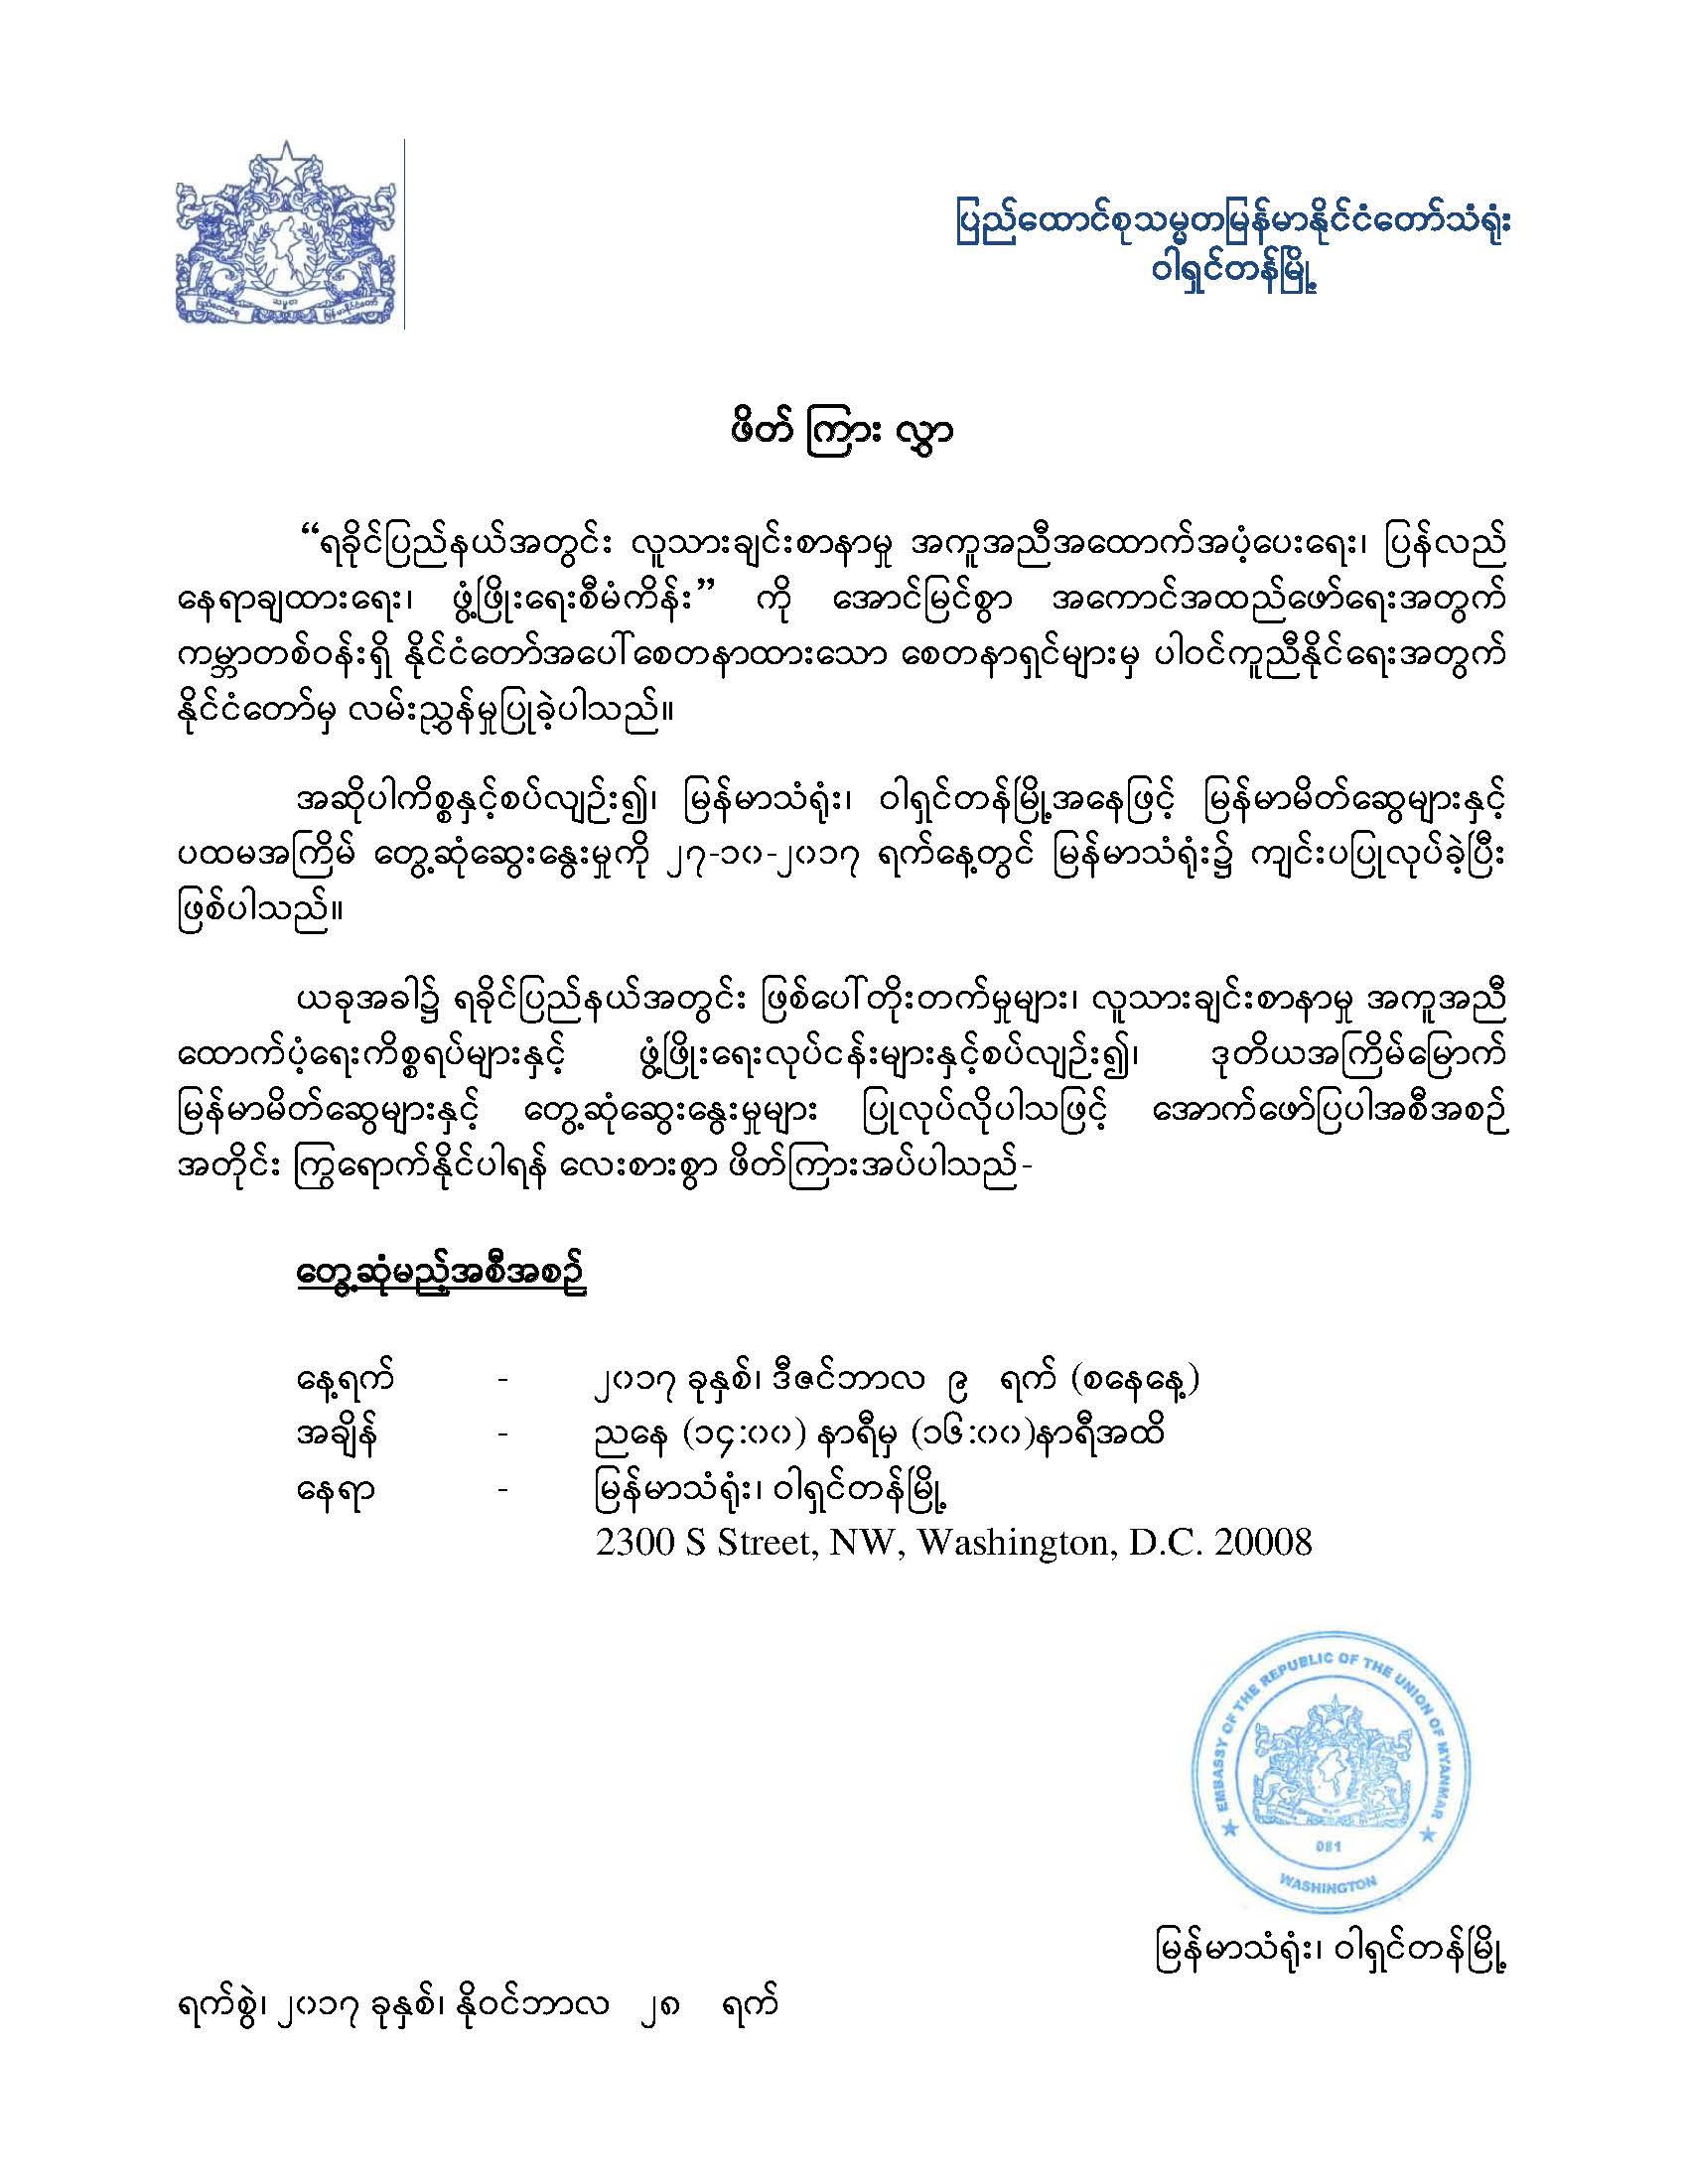 Invitation to Myanmar Community